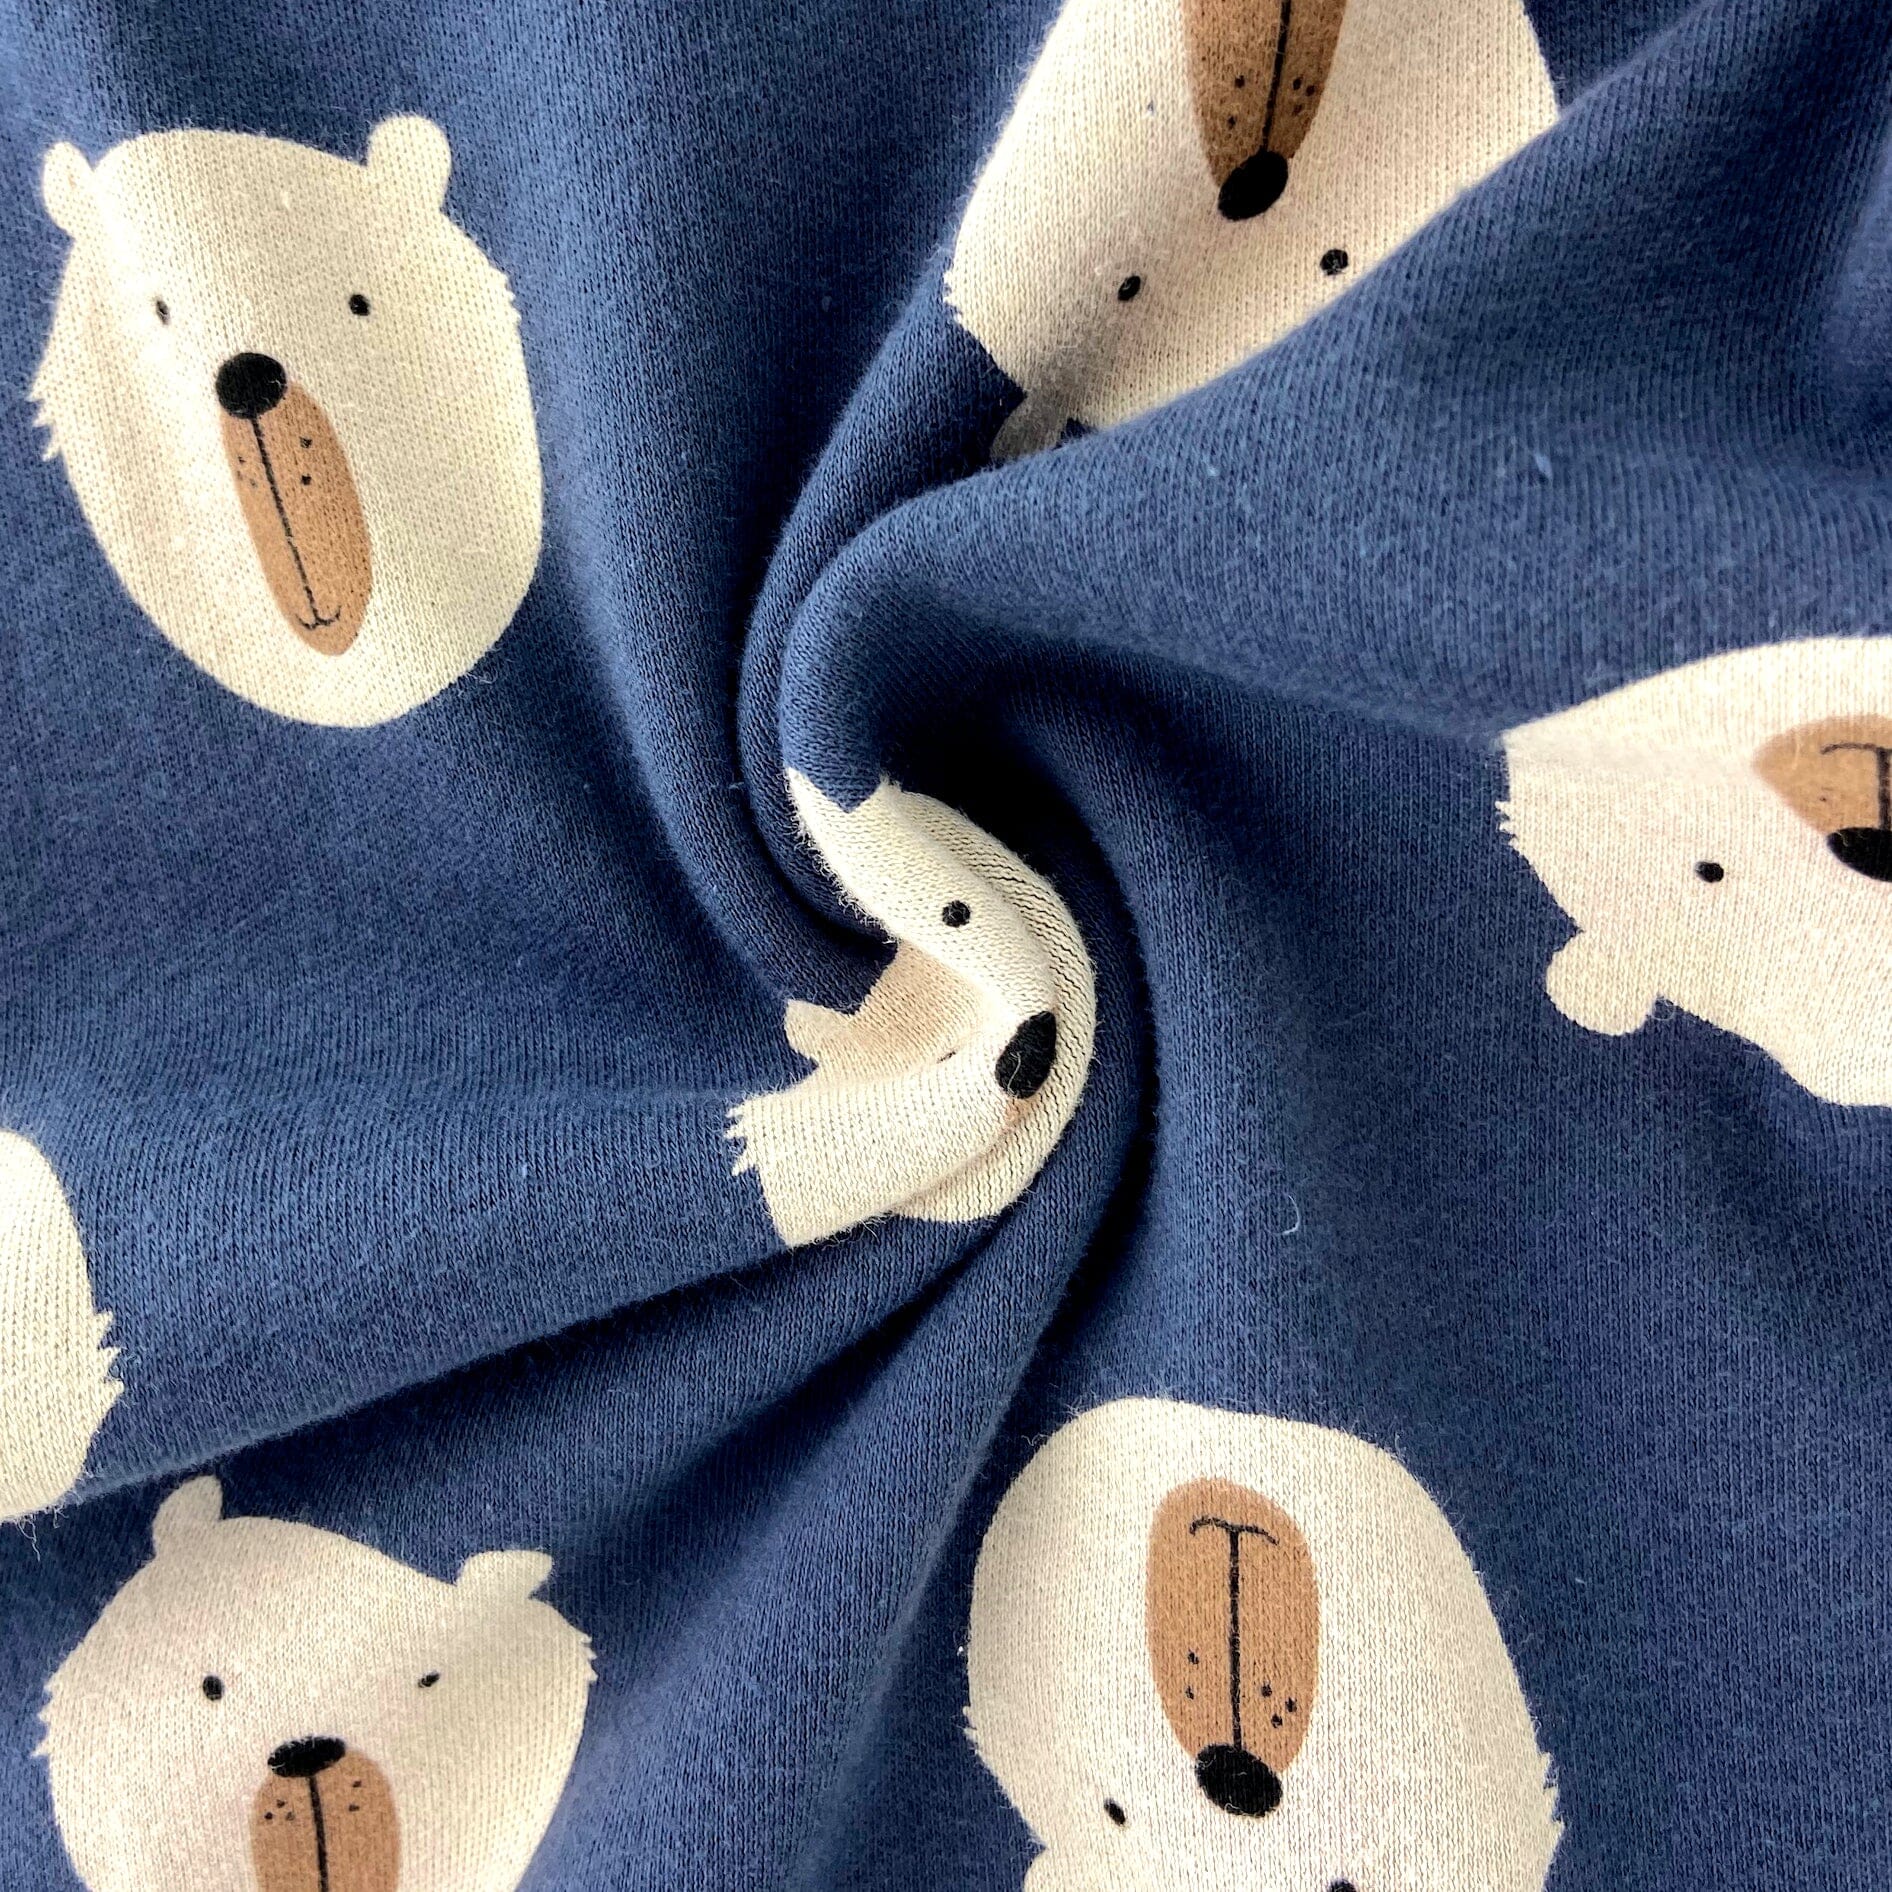 Men's Brown Bear All-Over-Print Soft Jersey Knit Long Pajama Pants